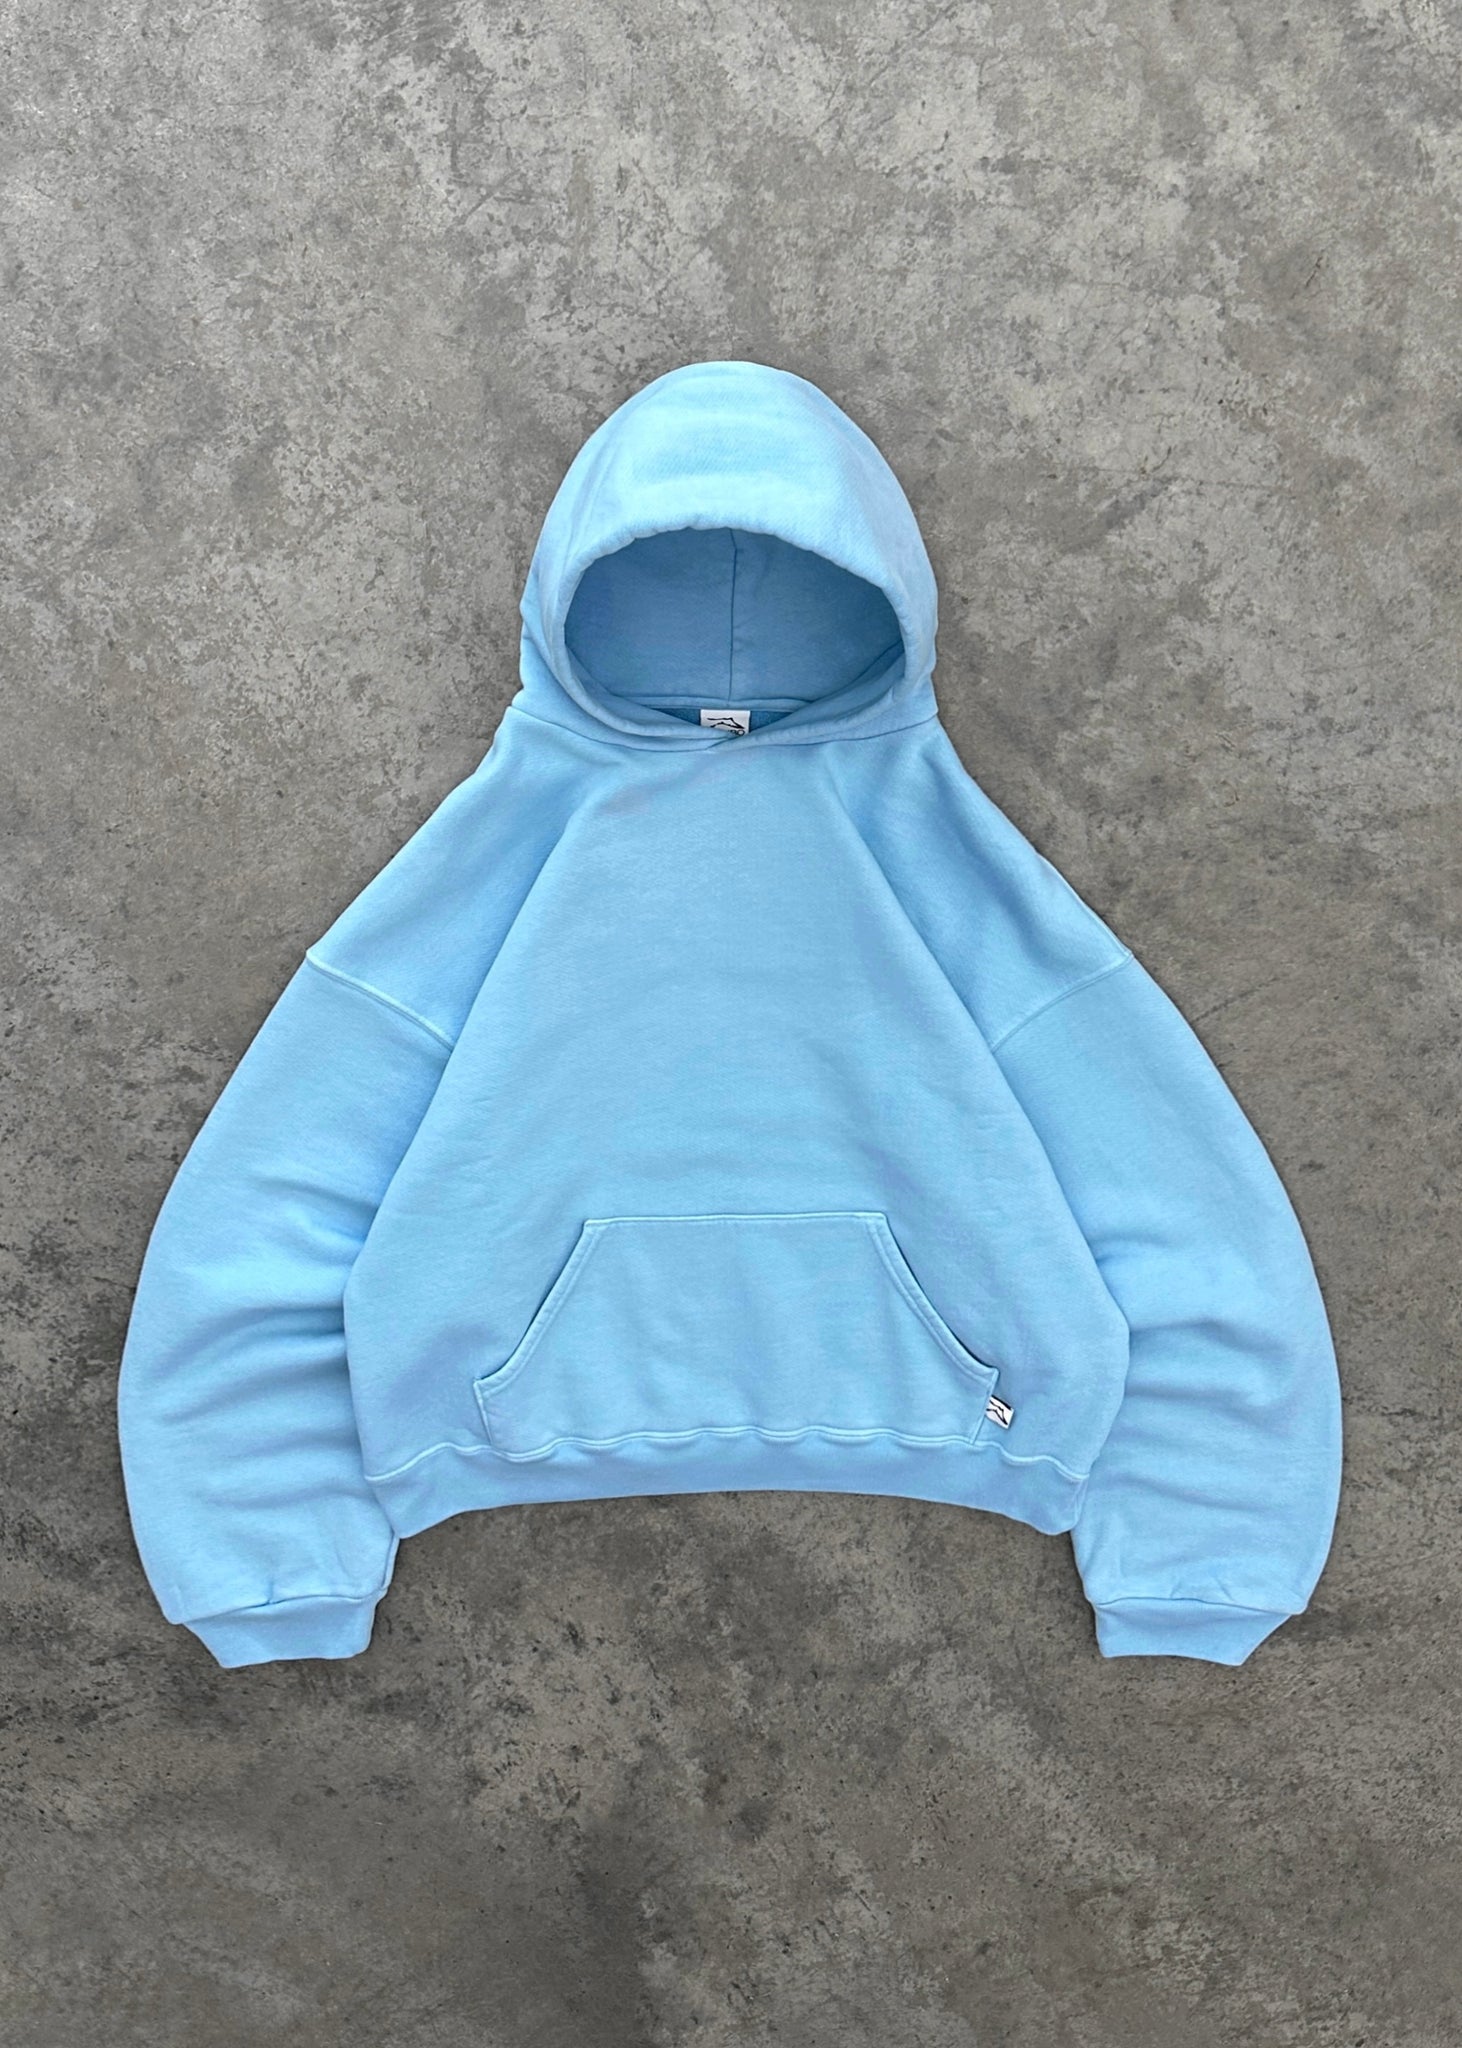 Akimbo club hoodie